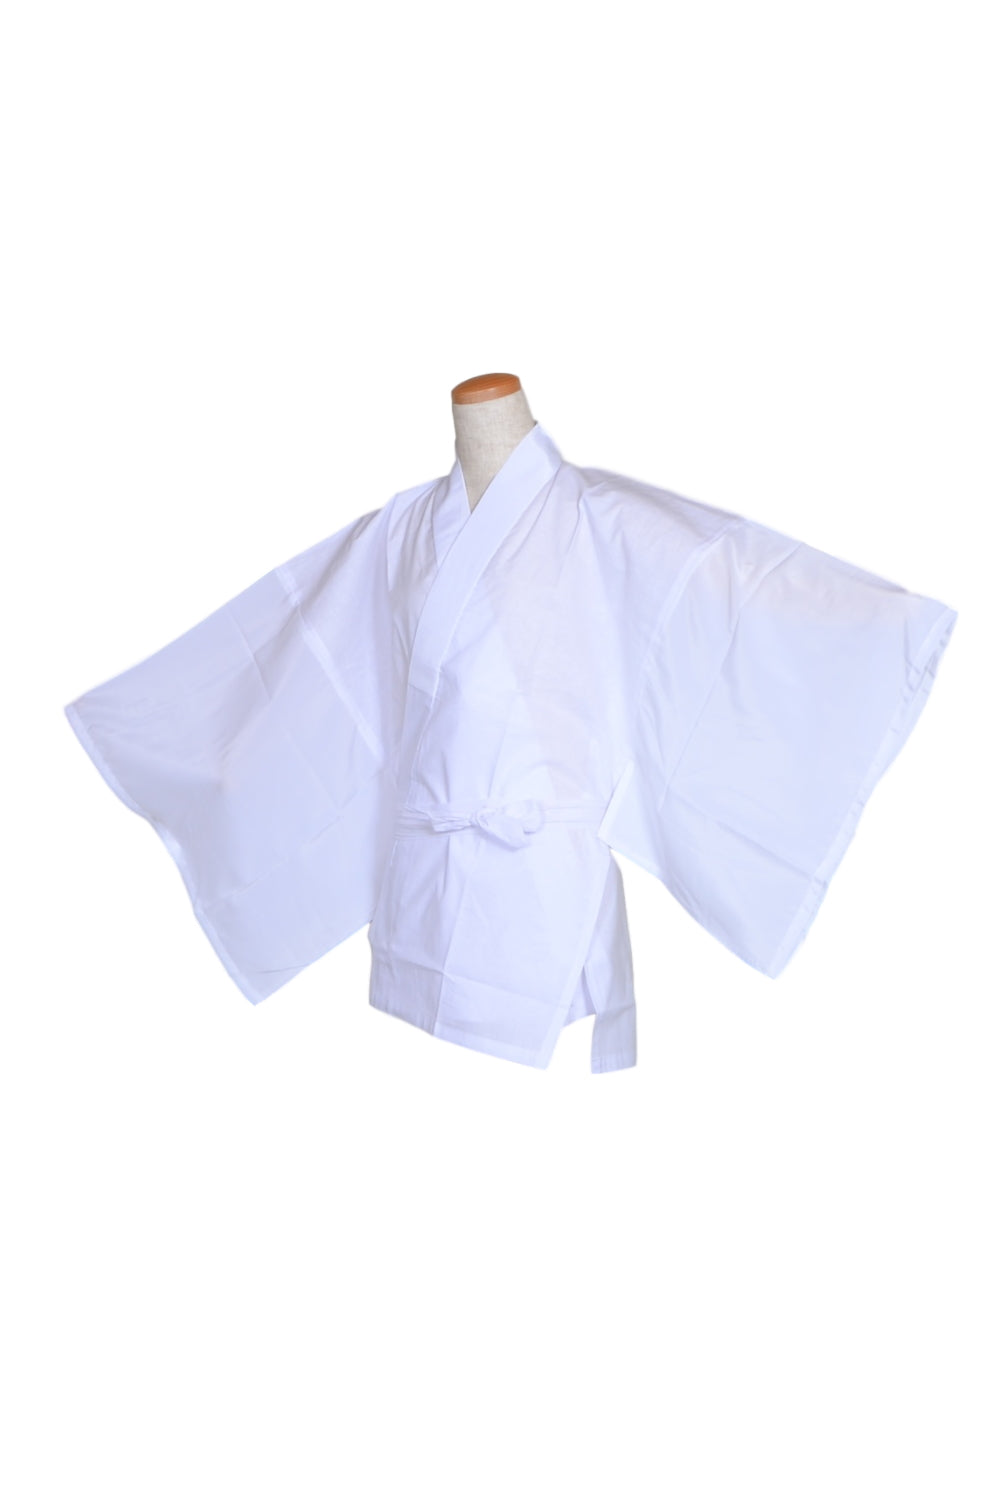 Men undergarment for men – Kimono yukata market sakura